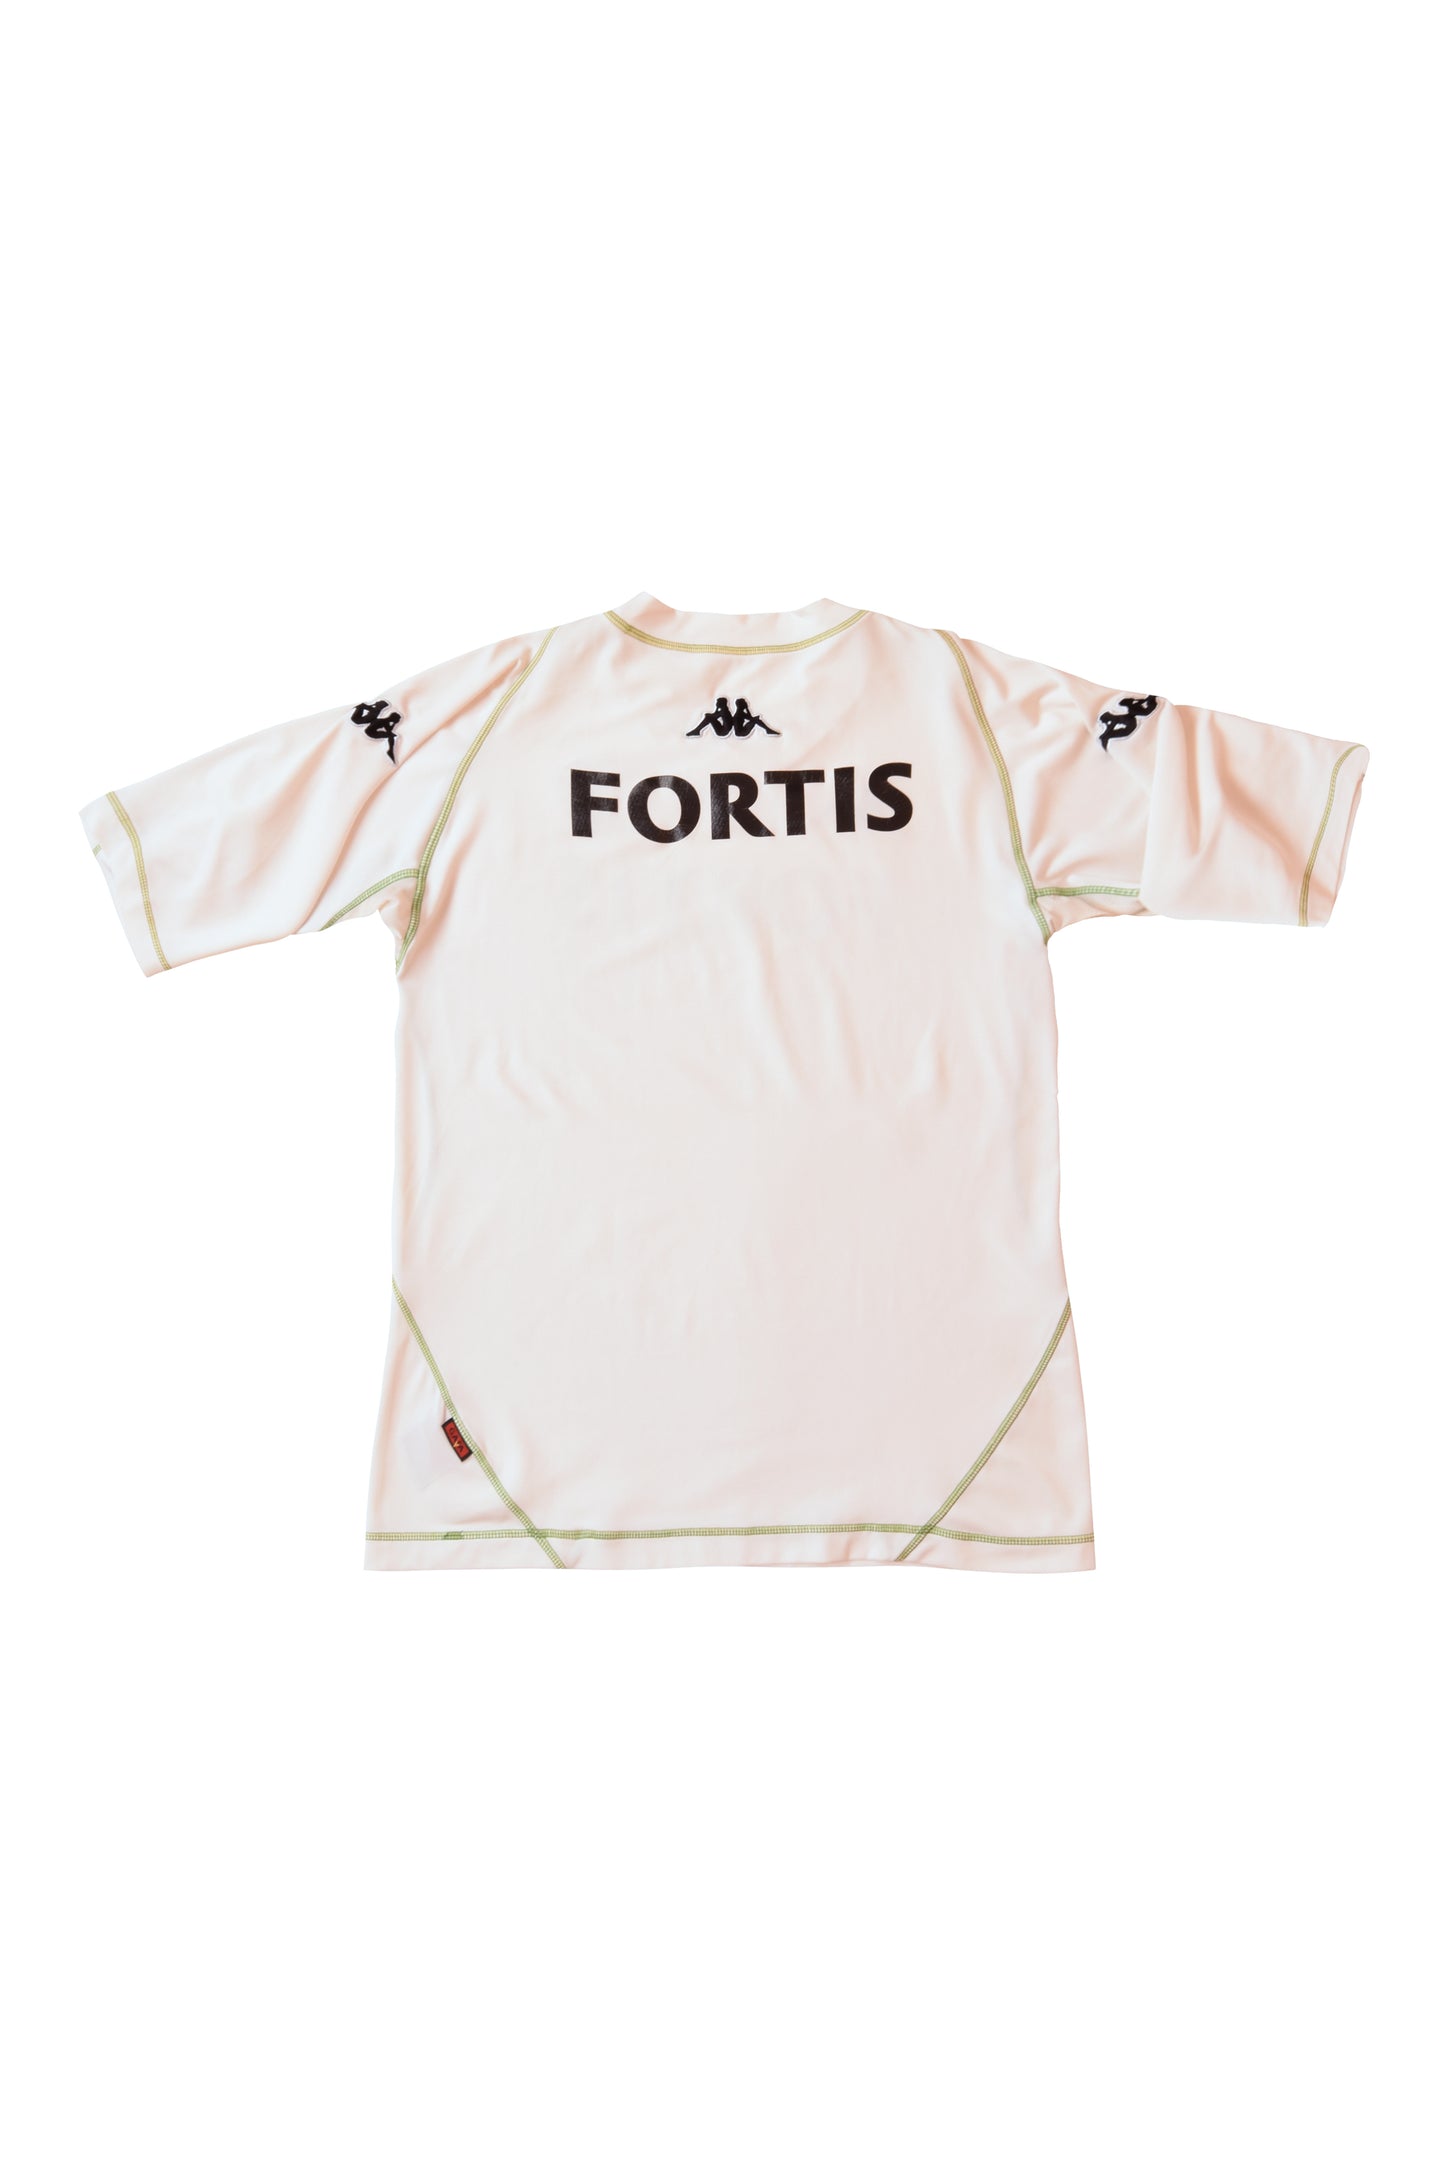 Kappa Feyenoord Rotterdam Football Shirt Size XL Slim Fit Fortis White